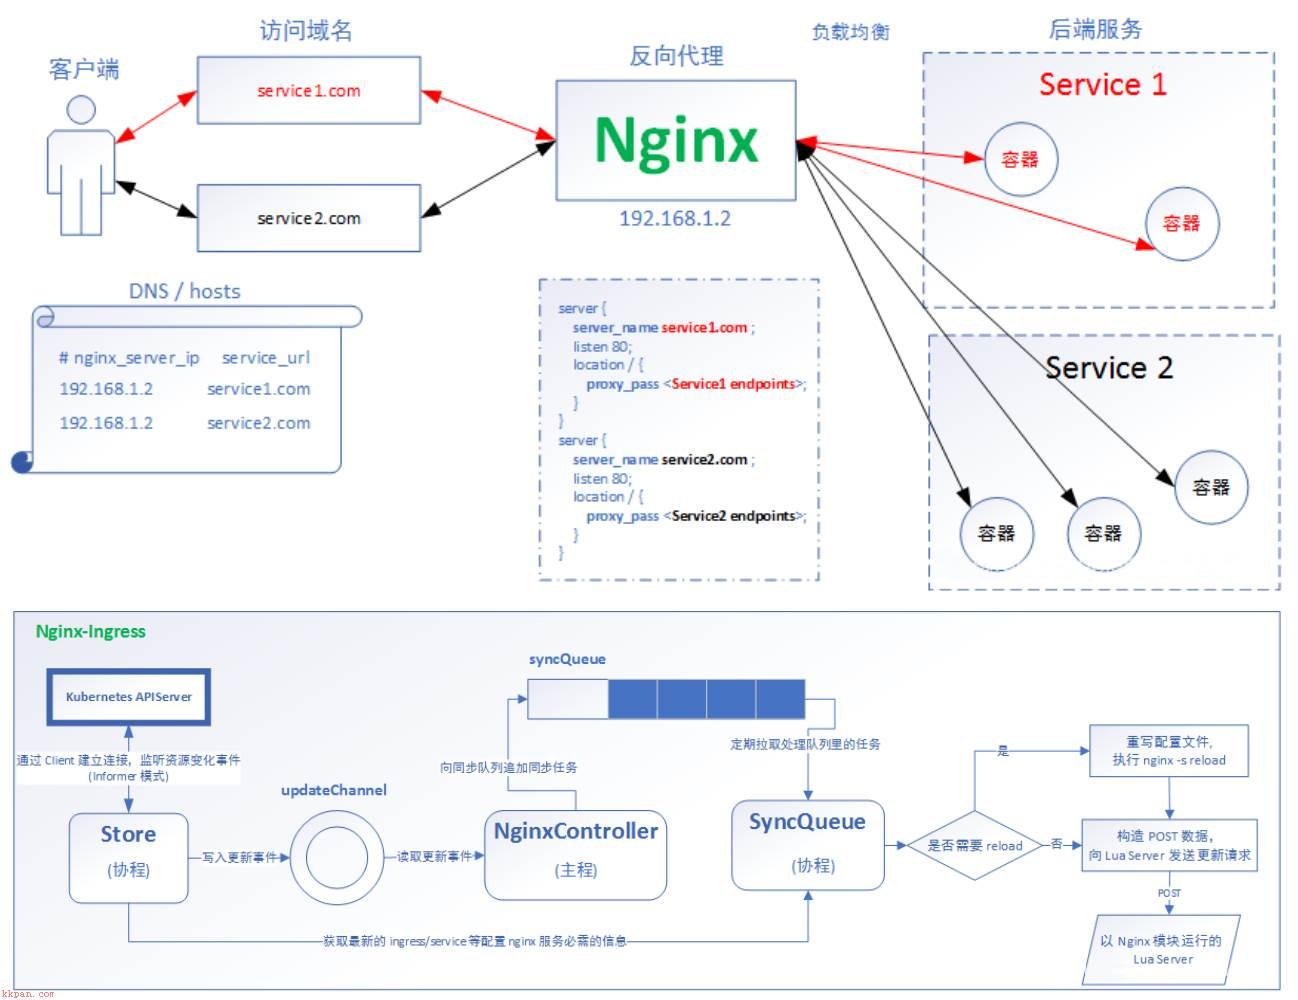 Ingress-Nginx 服务暴露基础学习与实践